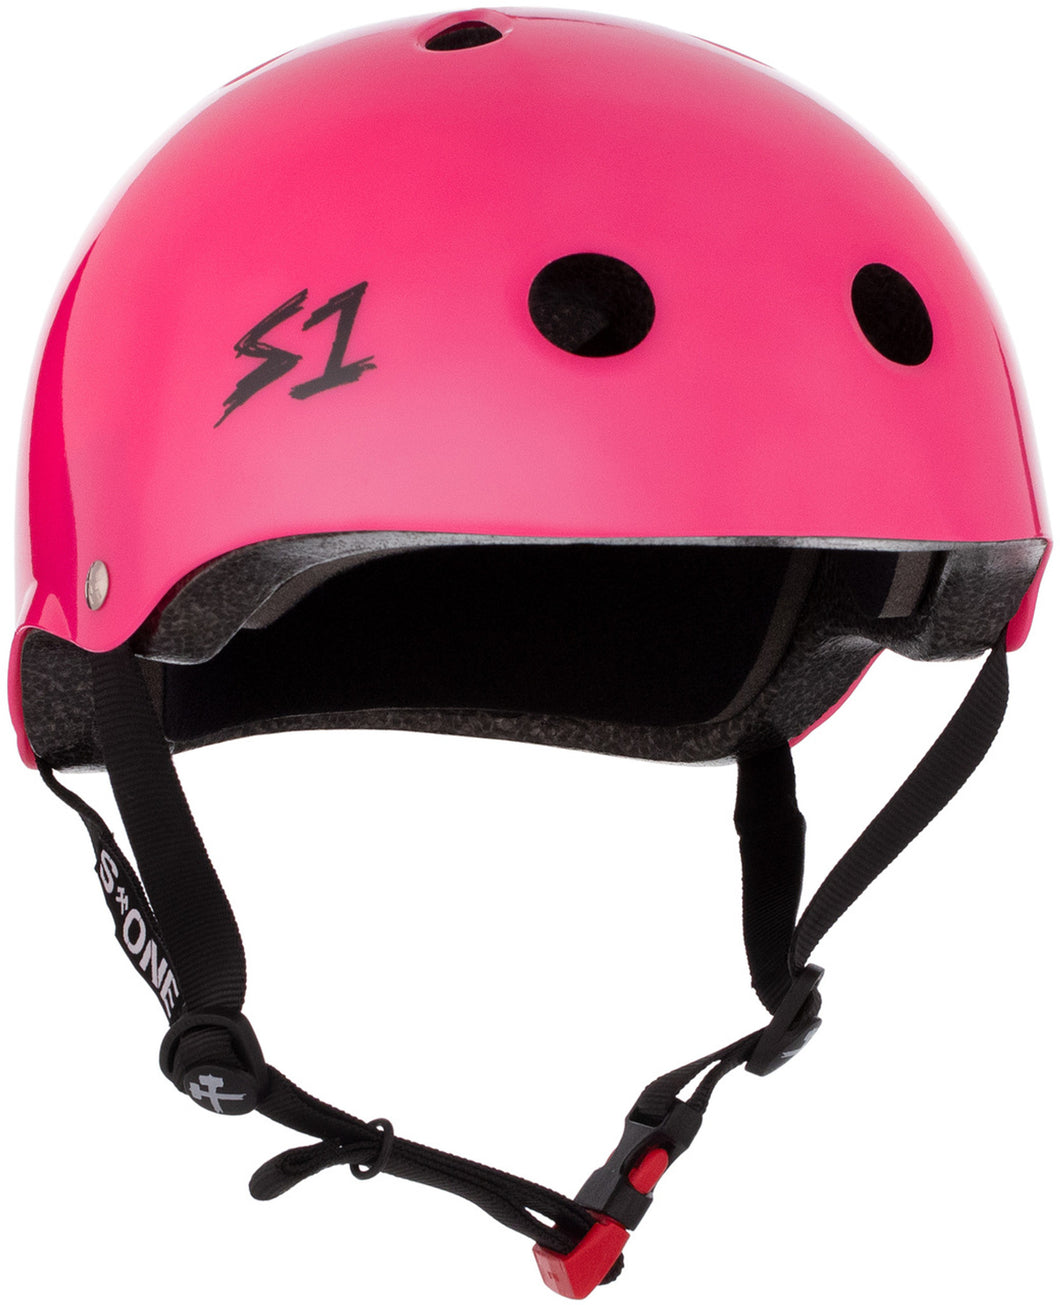 S-One Mini Lifer Kids Helmet - Hot Pink Gloss